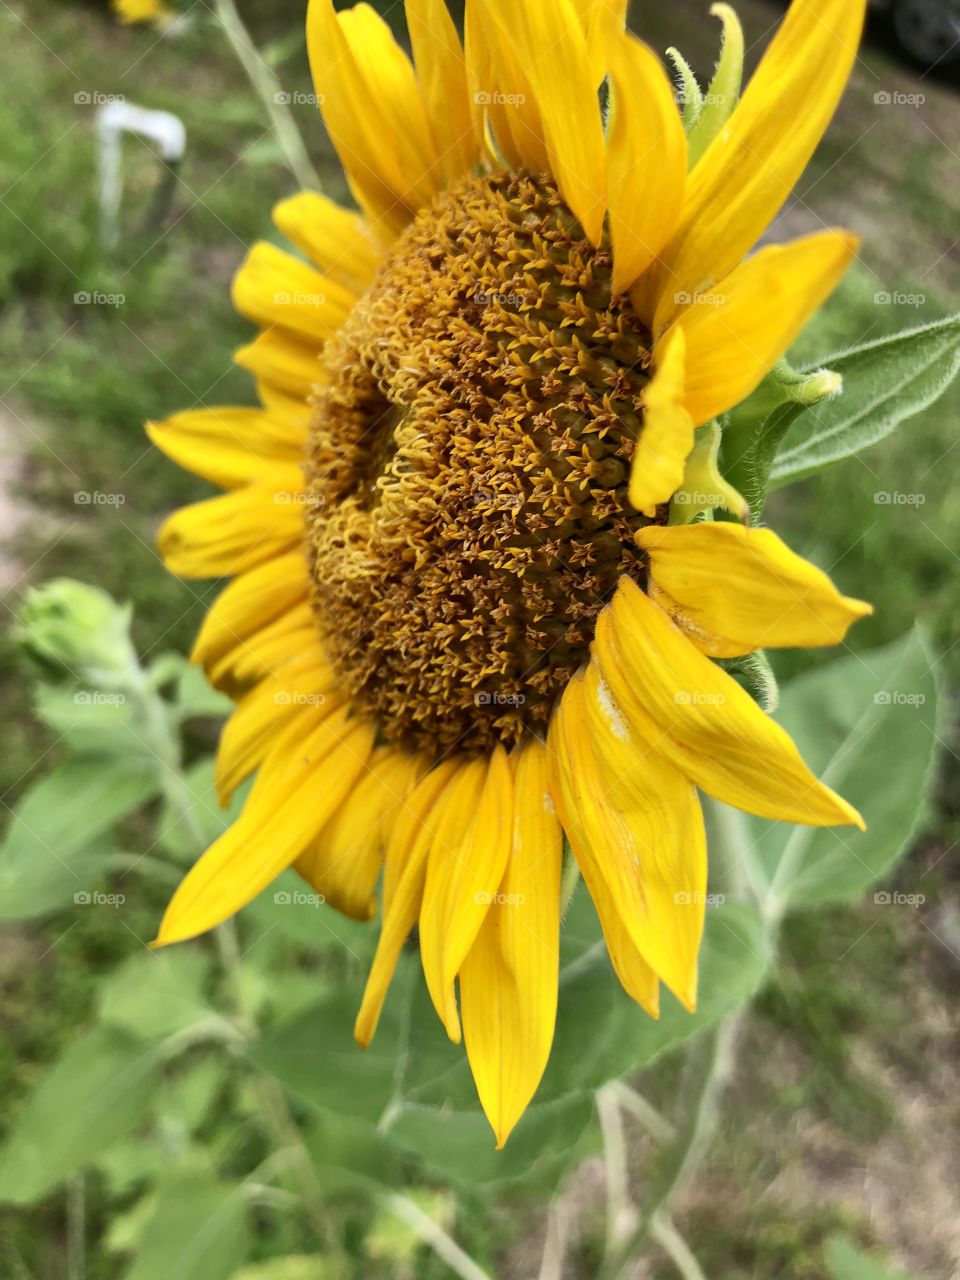 Sunflower side